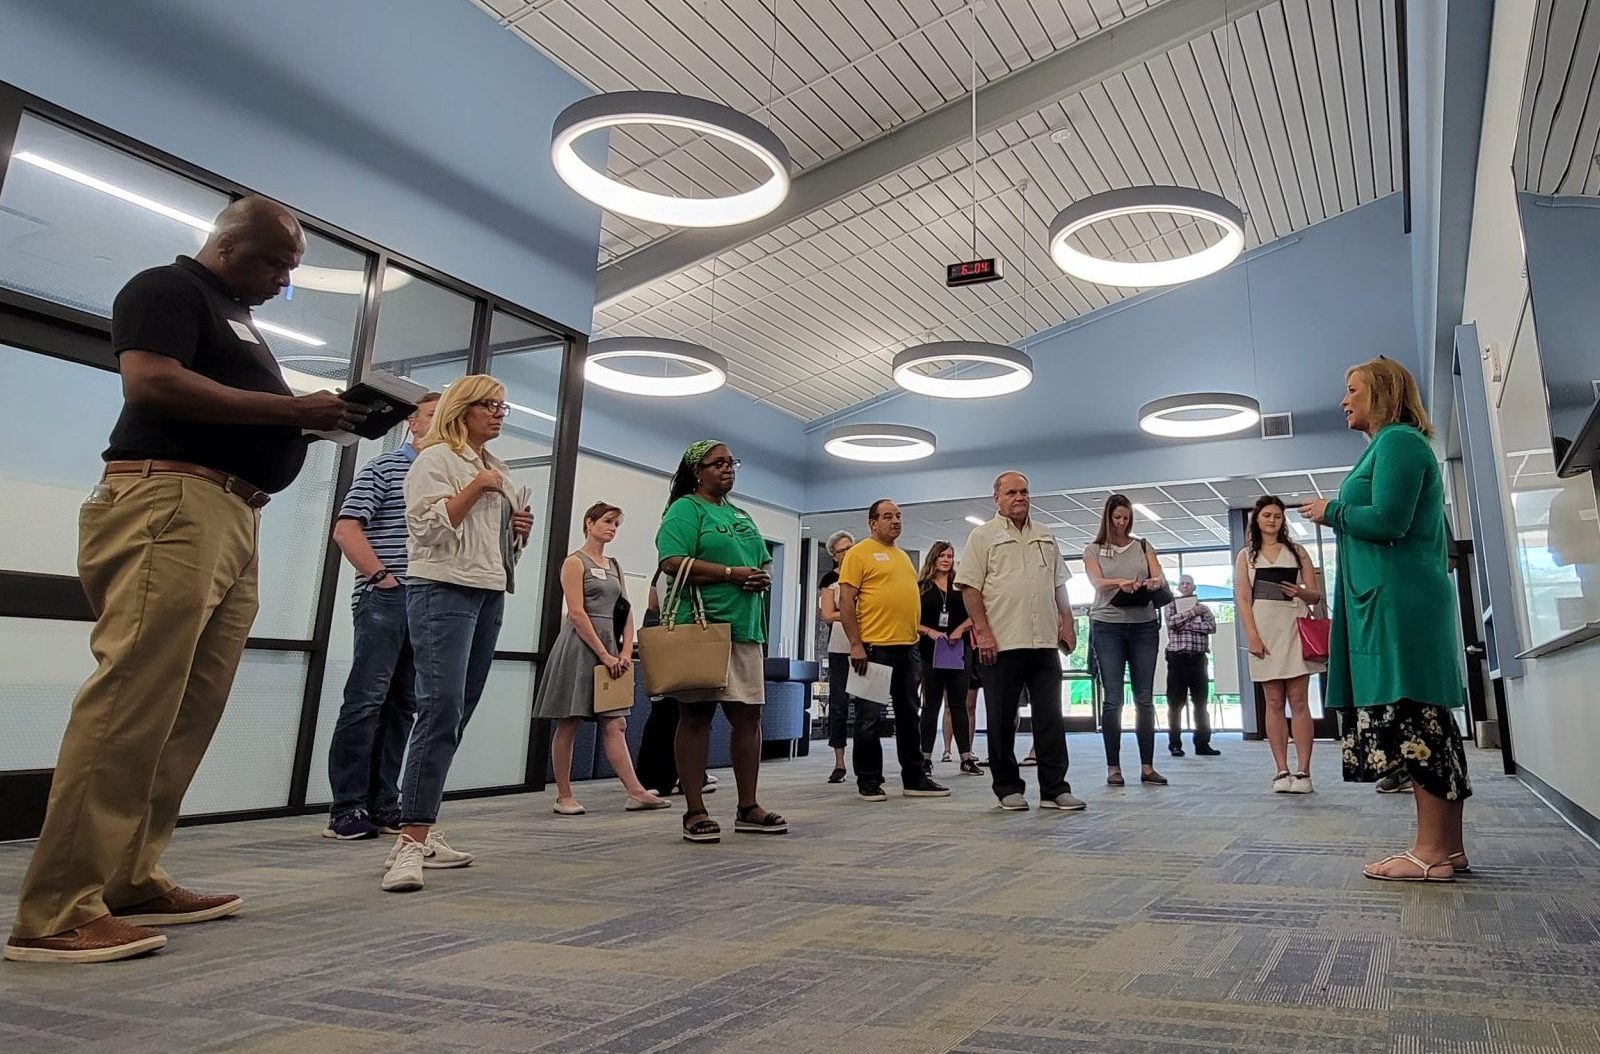 On tour of Springfield schools, task force explores intentional design vs. ‘cafegymatoriums'